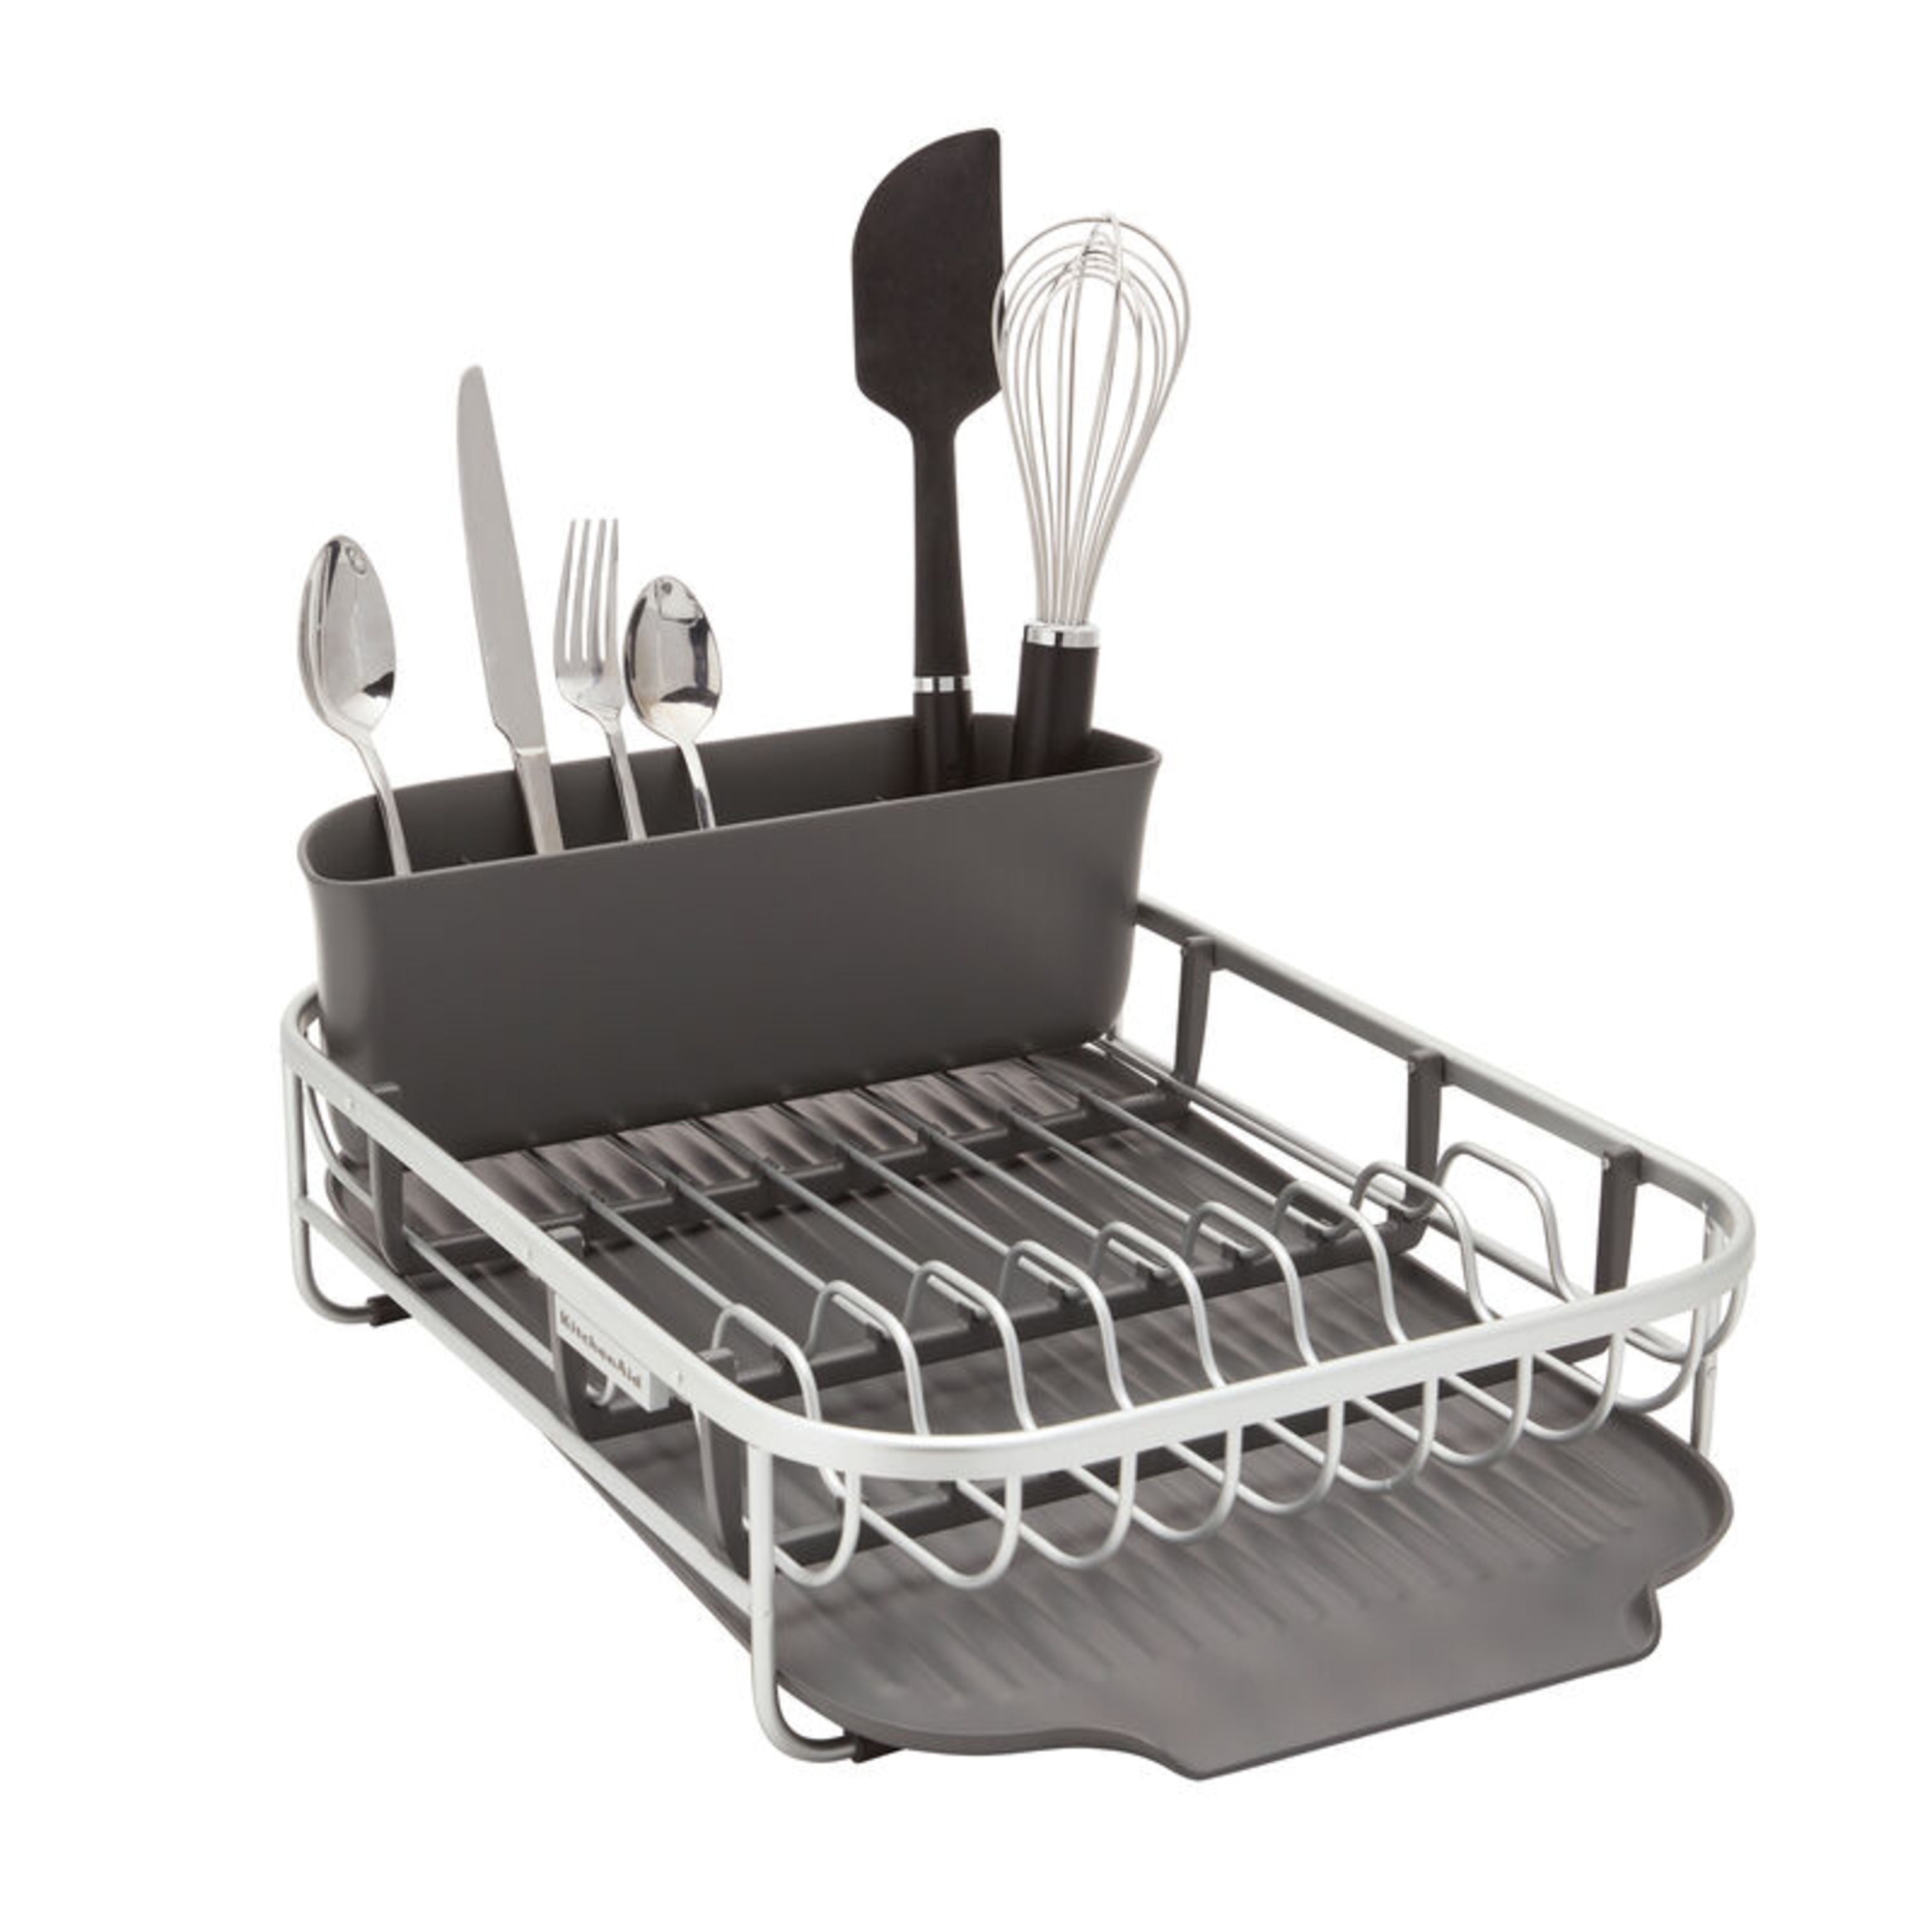  KitchenAid Compact Space Saving, Dish Rack with